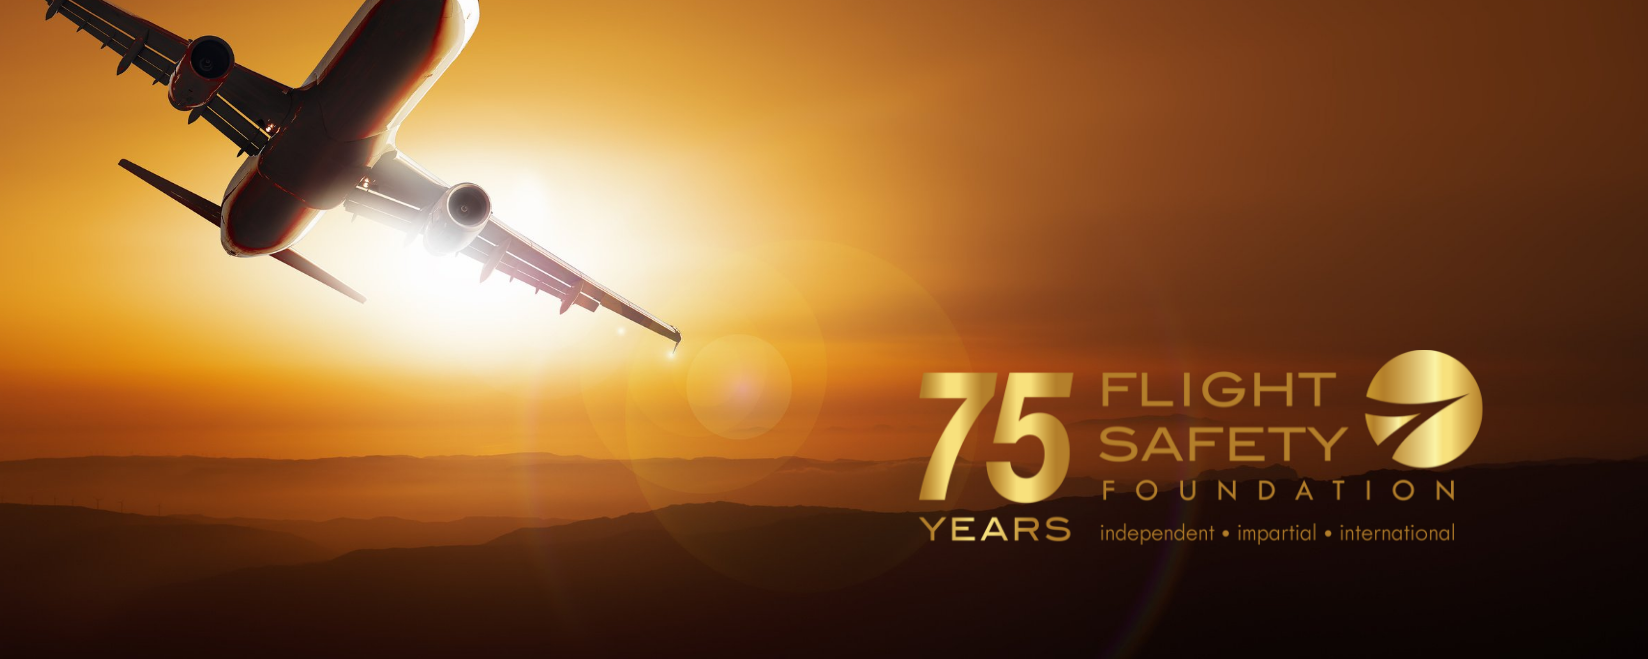 Flight Safety Foundation - 75th Anniversary